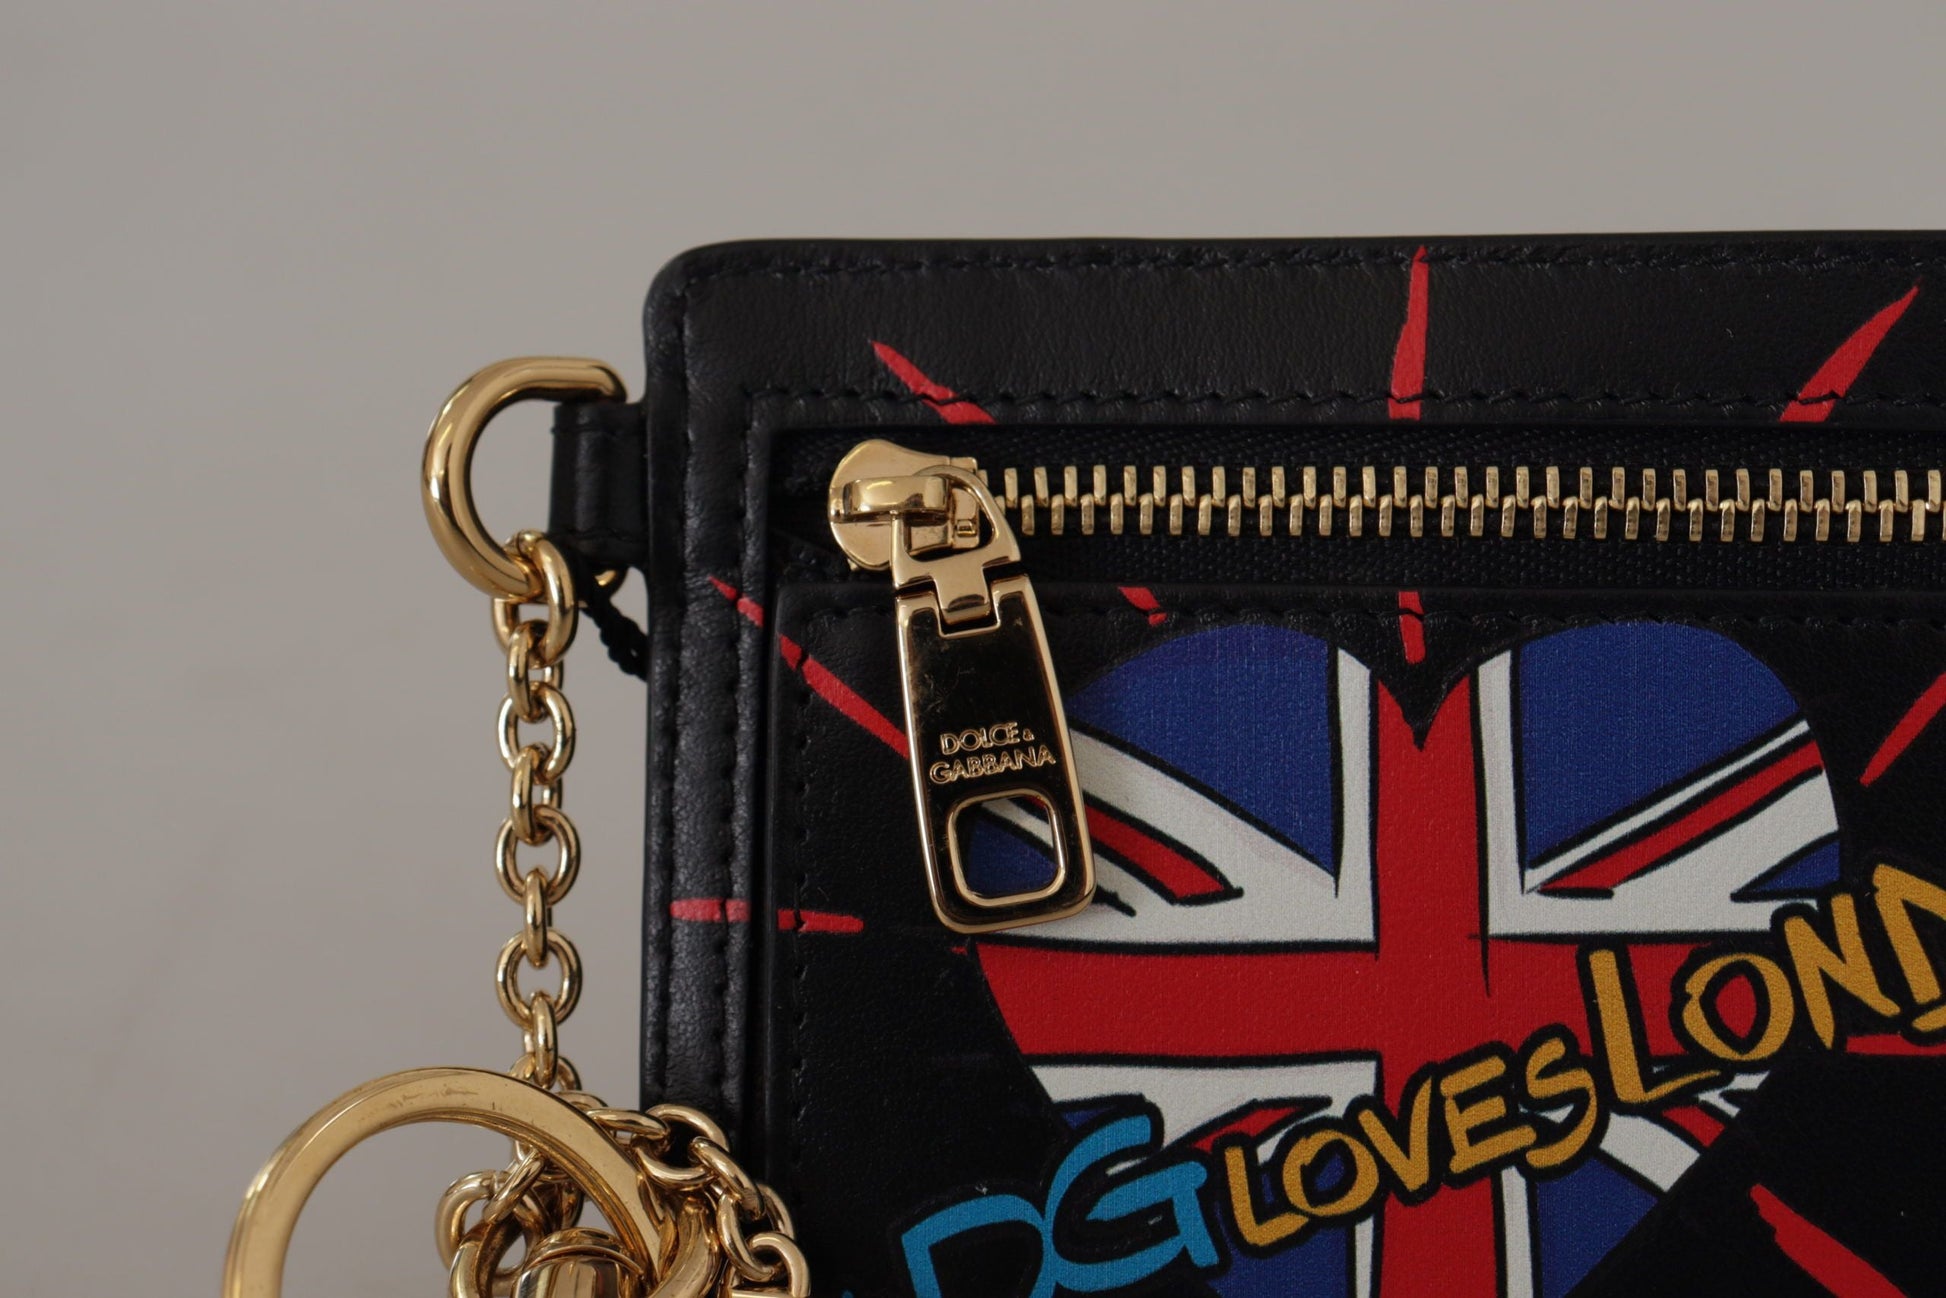 Fashionsarah.com Fashionsarah.com Dolce & Gabbana Black Leather #DGLovesLondon Keyring Cardholder Coin Case